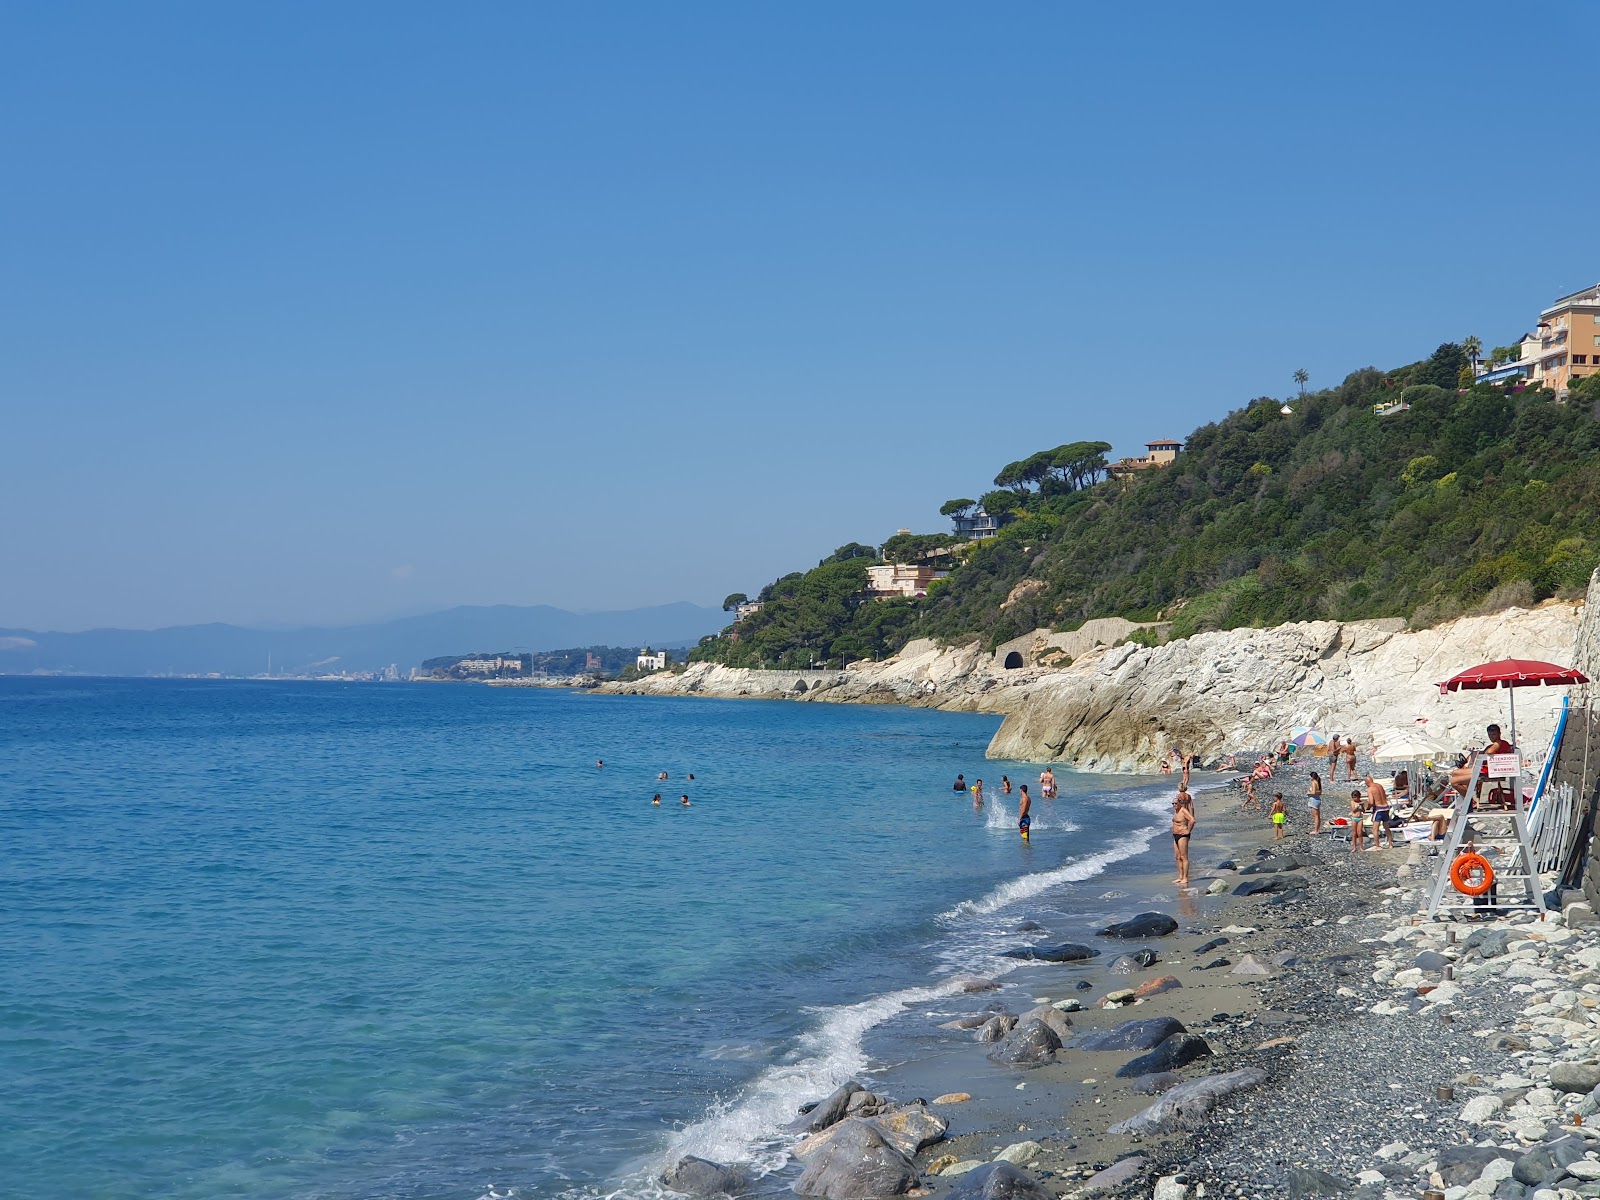 Foto von Spiaggia libera Abbelinou mit grauer kies Oberfläche